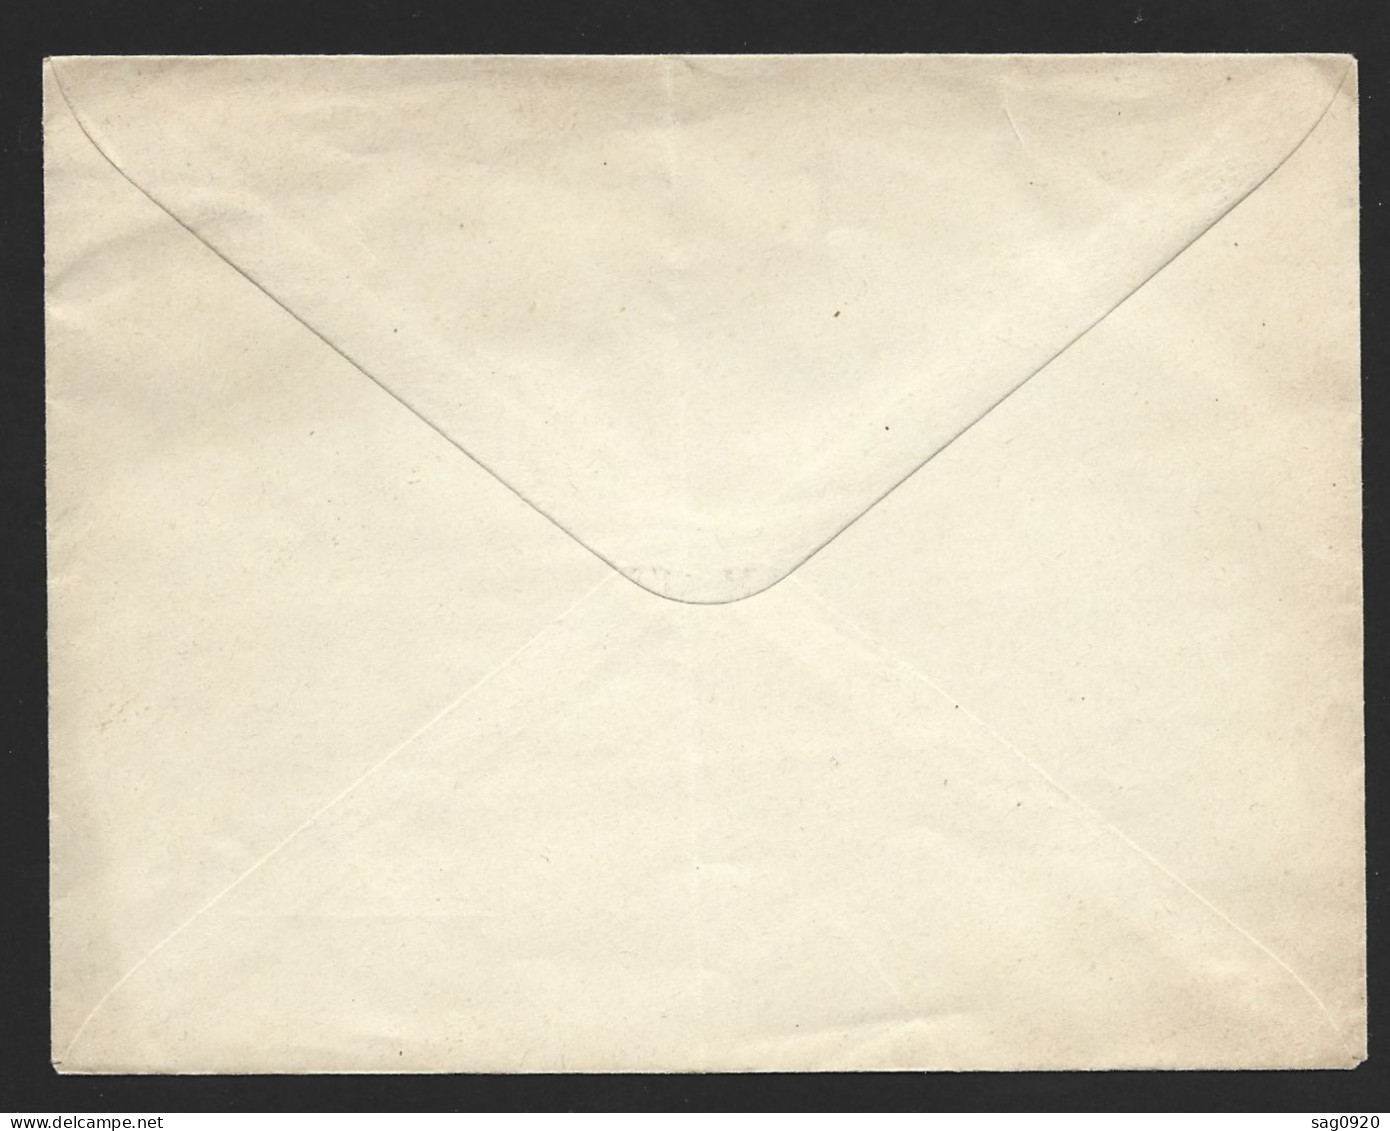 Entier Postal-Enveloppe Type Paix Avec Repiquage Jammes & Wanecq - Cartoline Postali Ristampe (ante 1955)